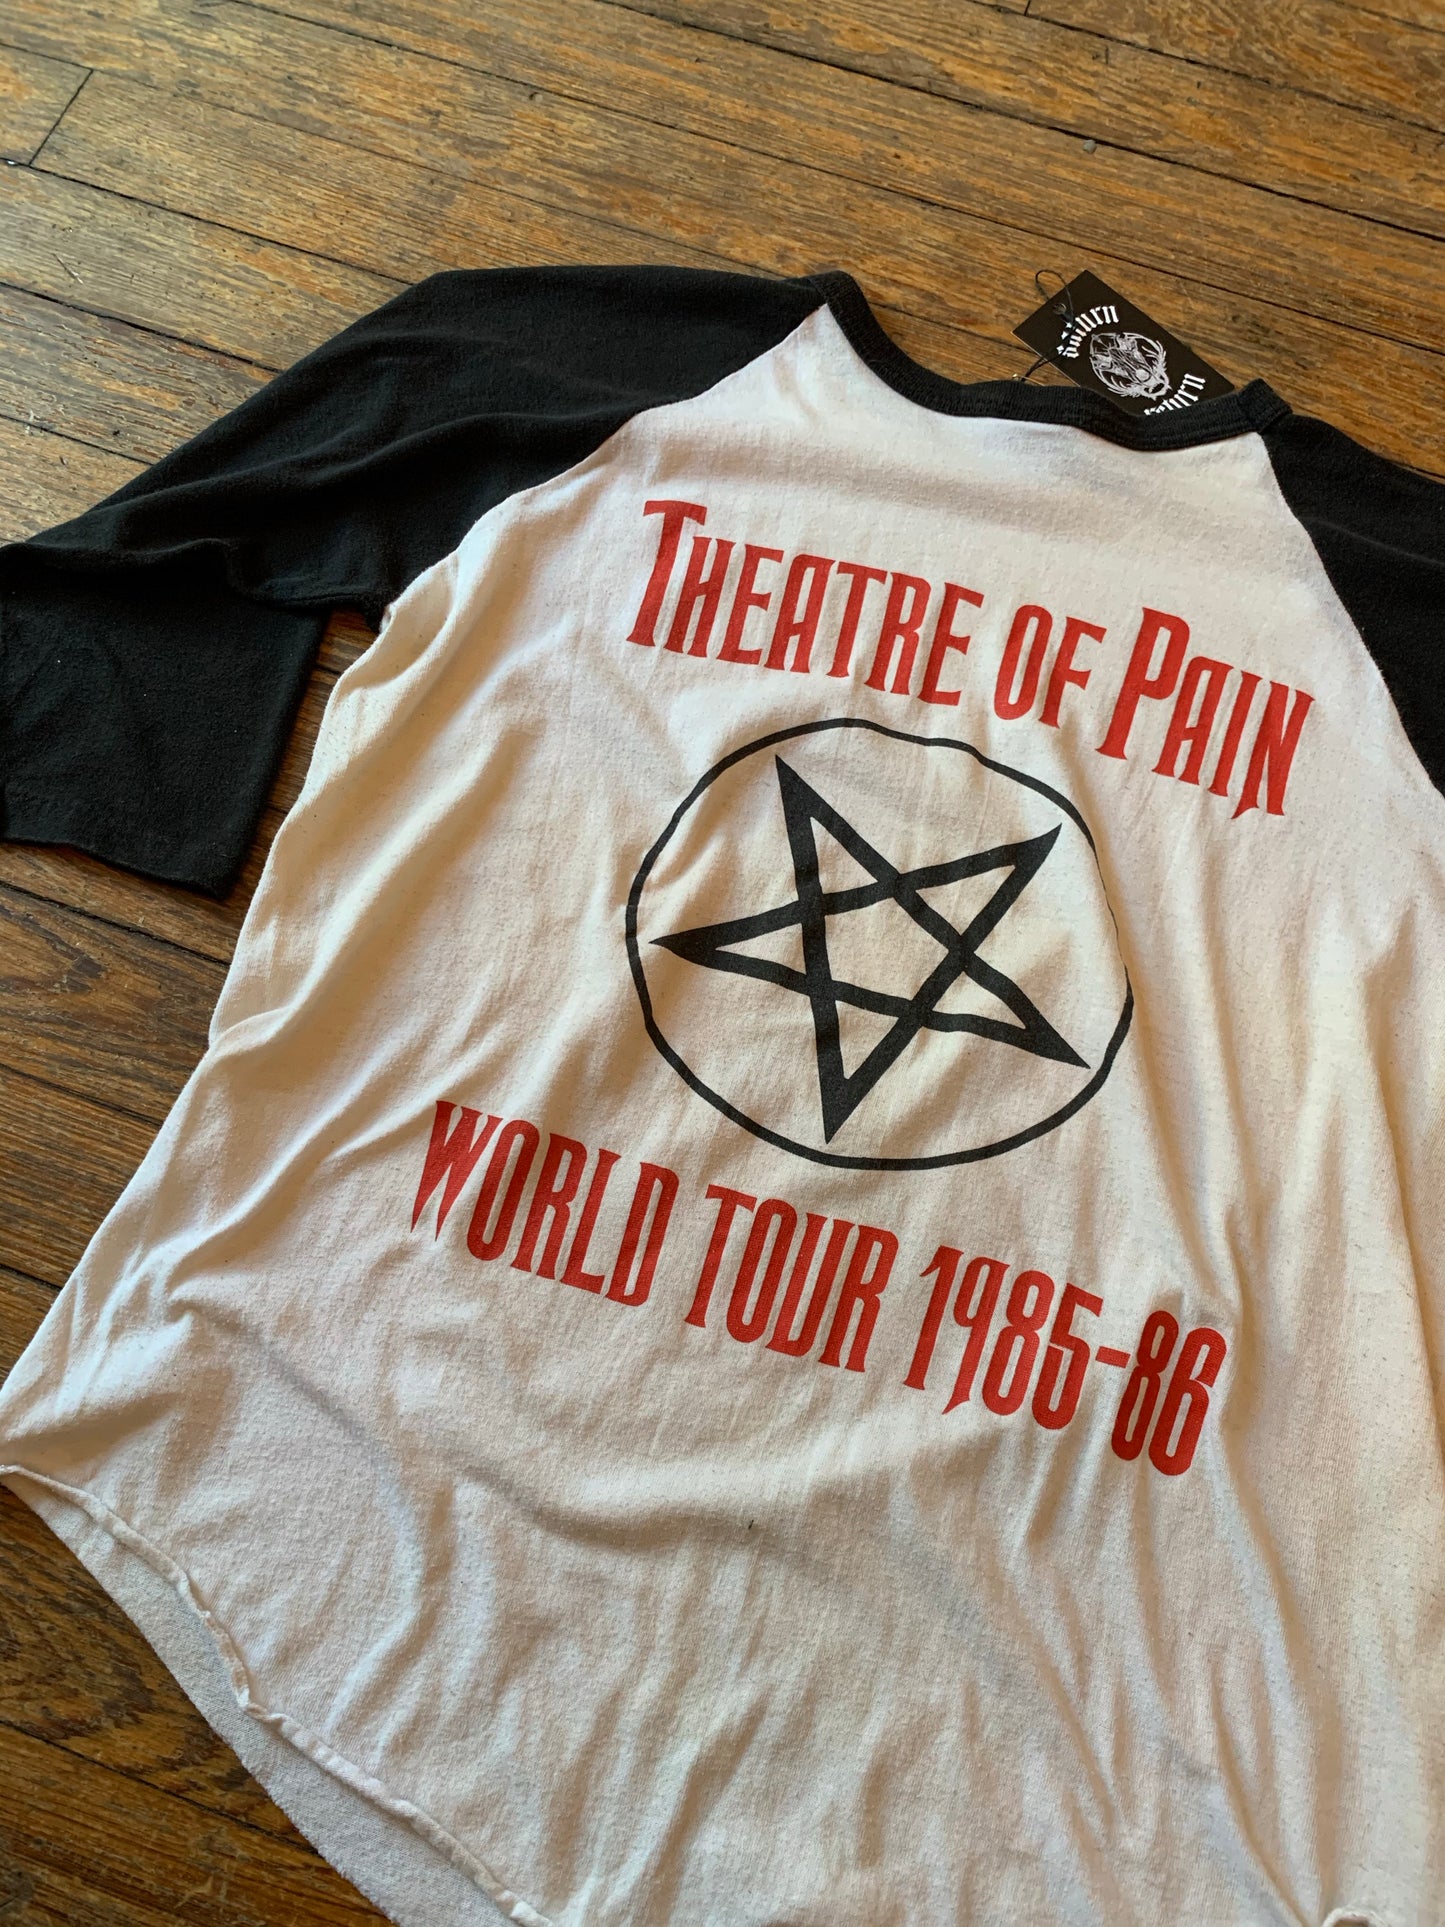 Vintage 1985/86 Mötley Crüe Theatre of Pain World Tour Allister Fiend Raglan T-Shirt